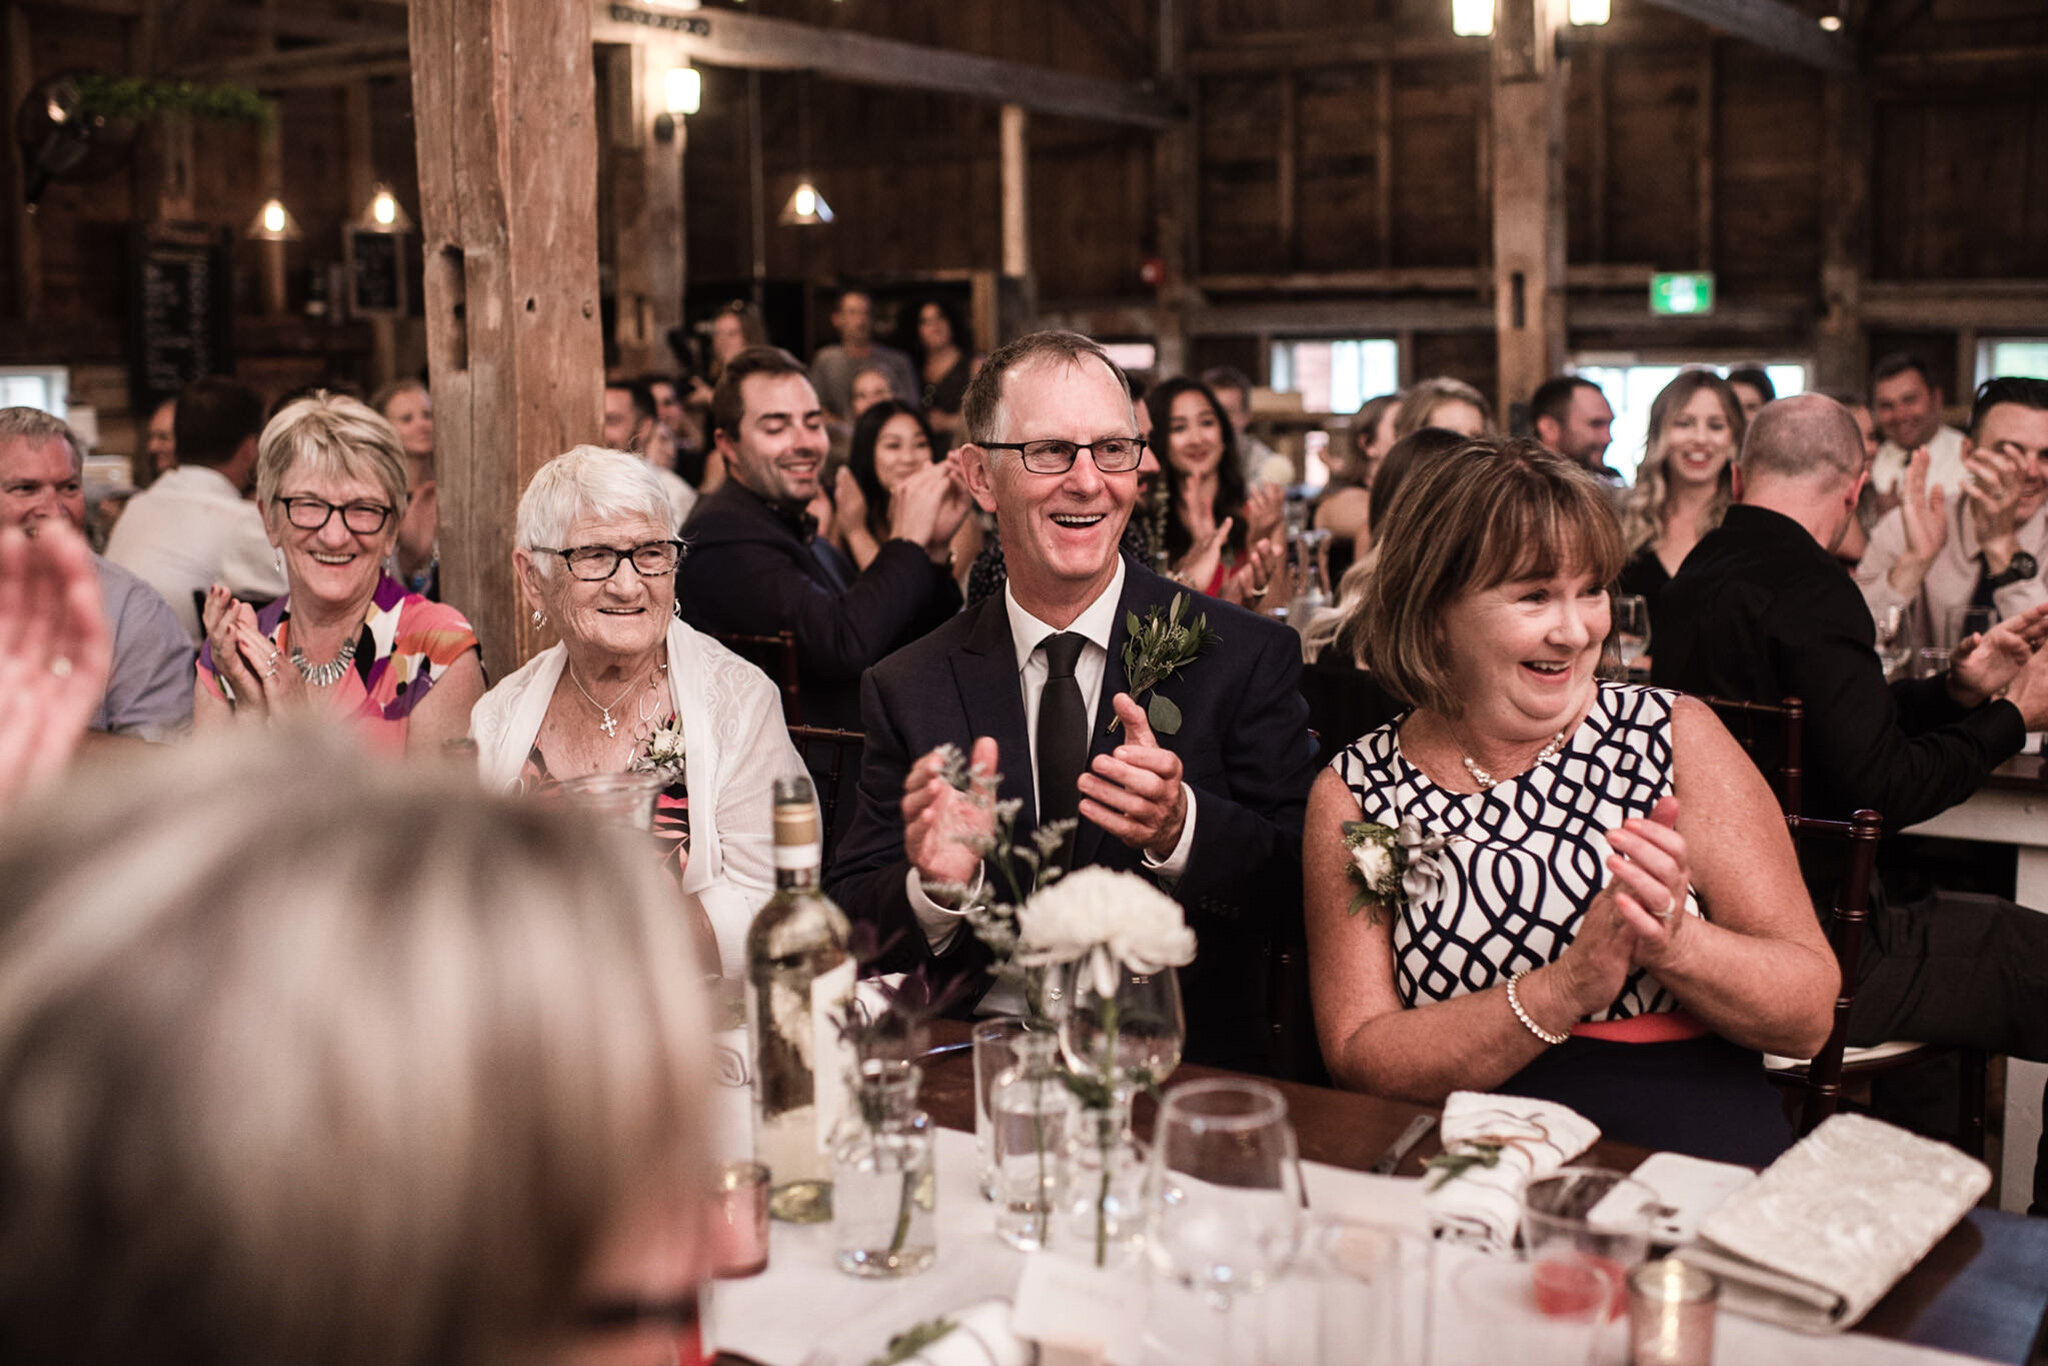 096-parents-of-groom-speech-reactions-reception-in-barn-romantic.jpg